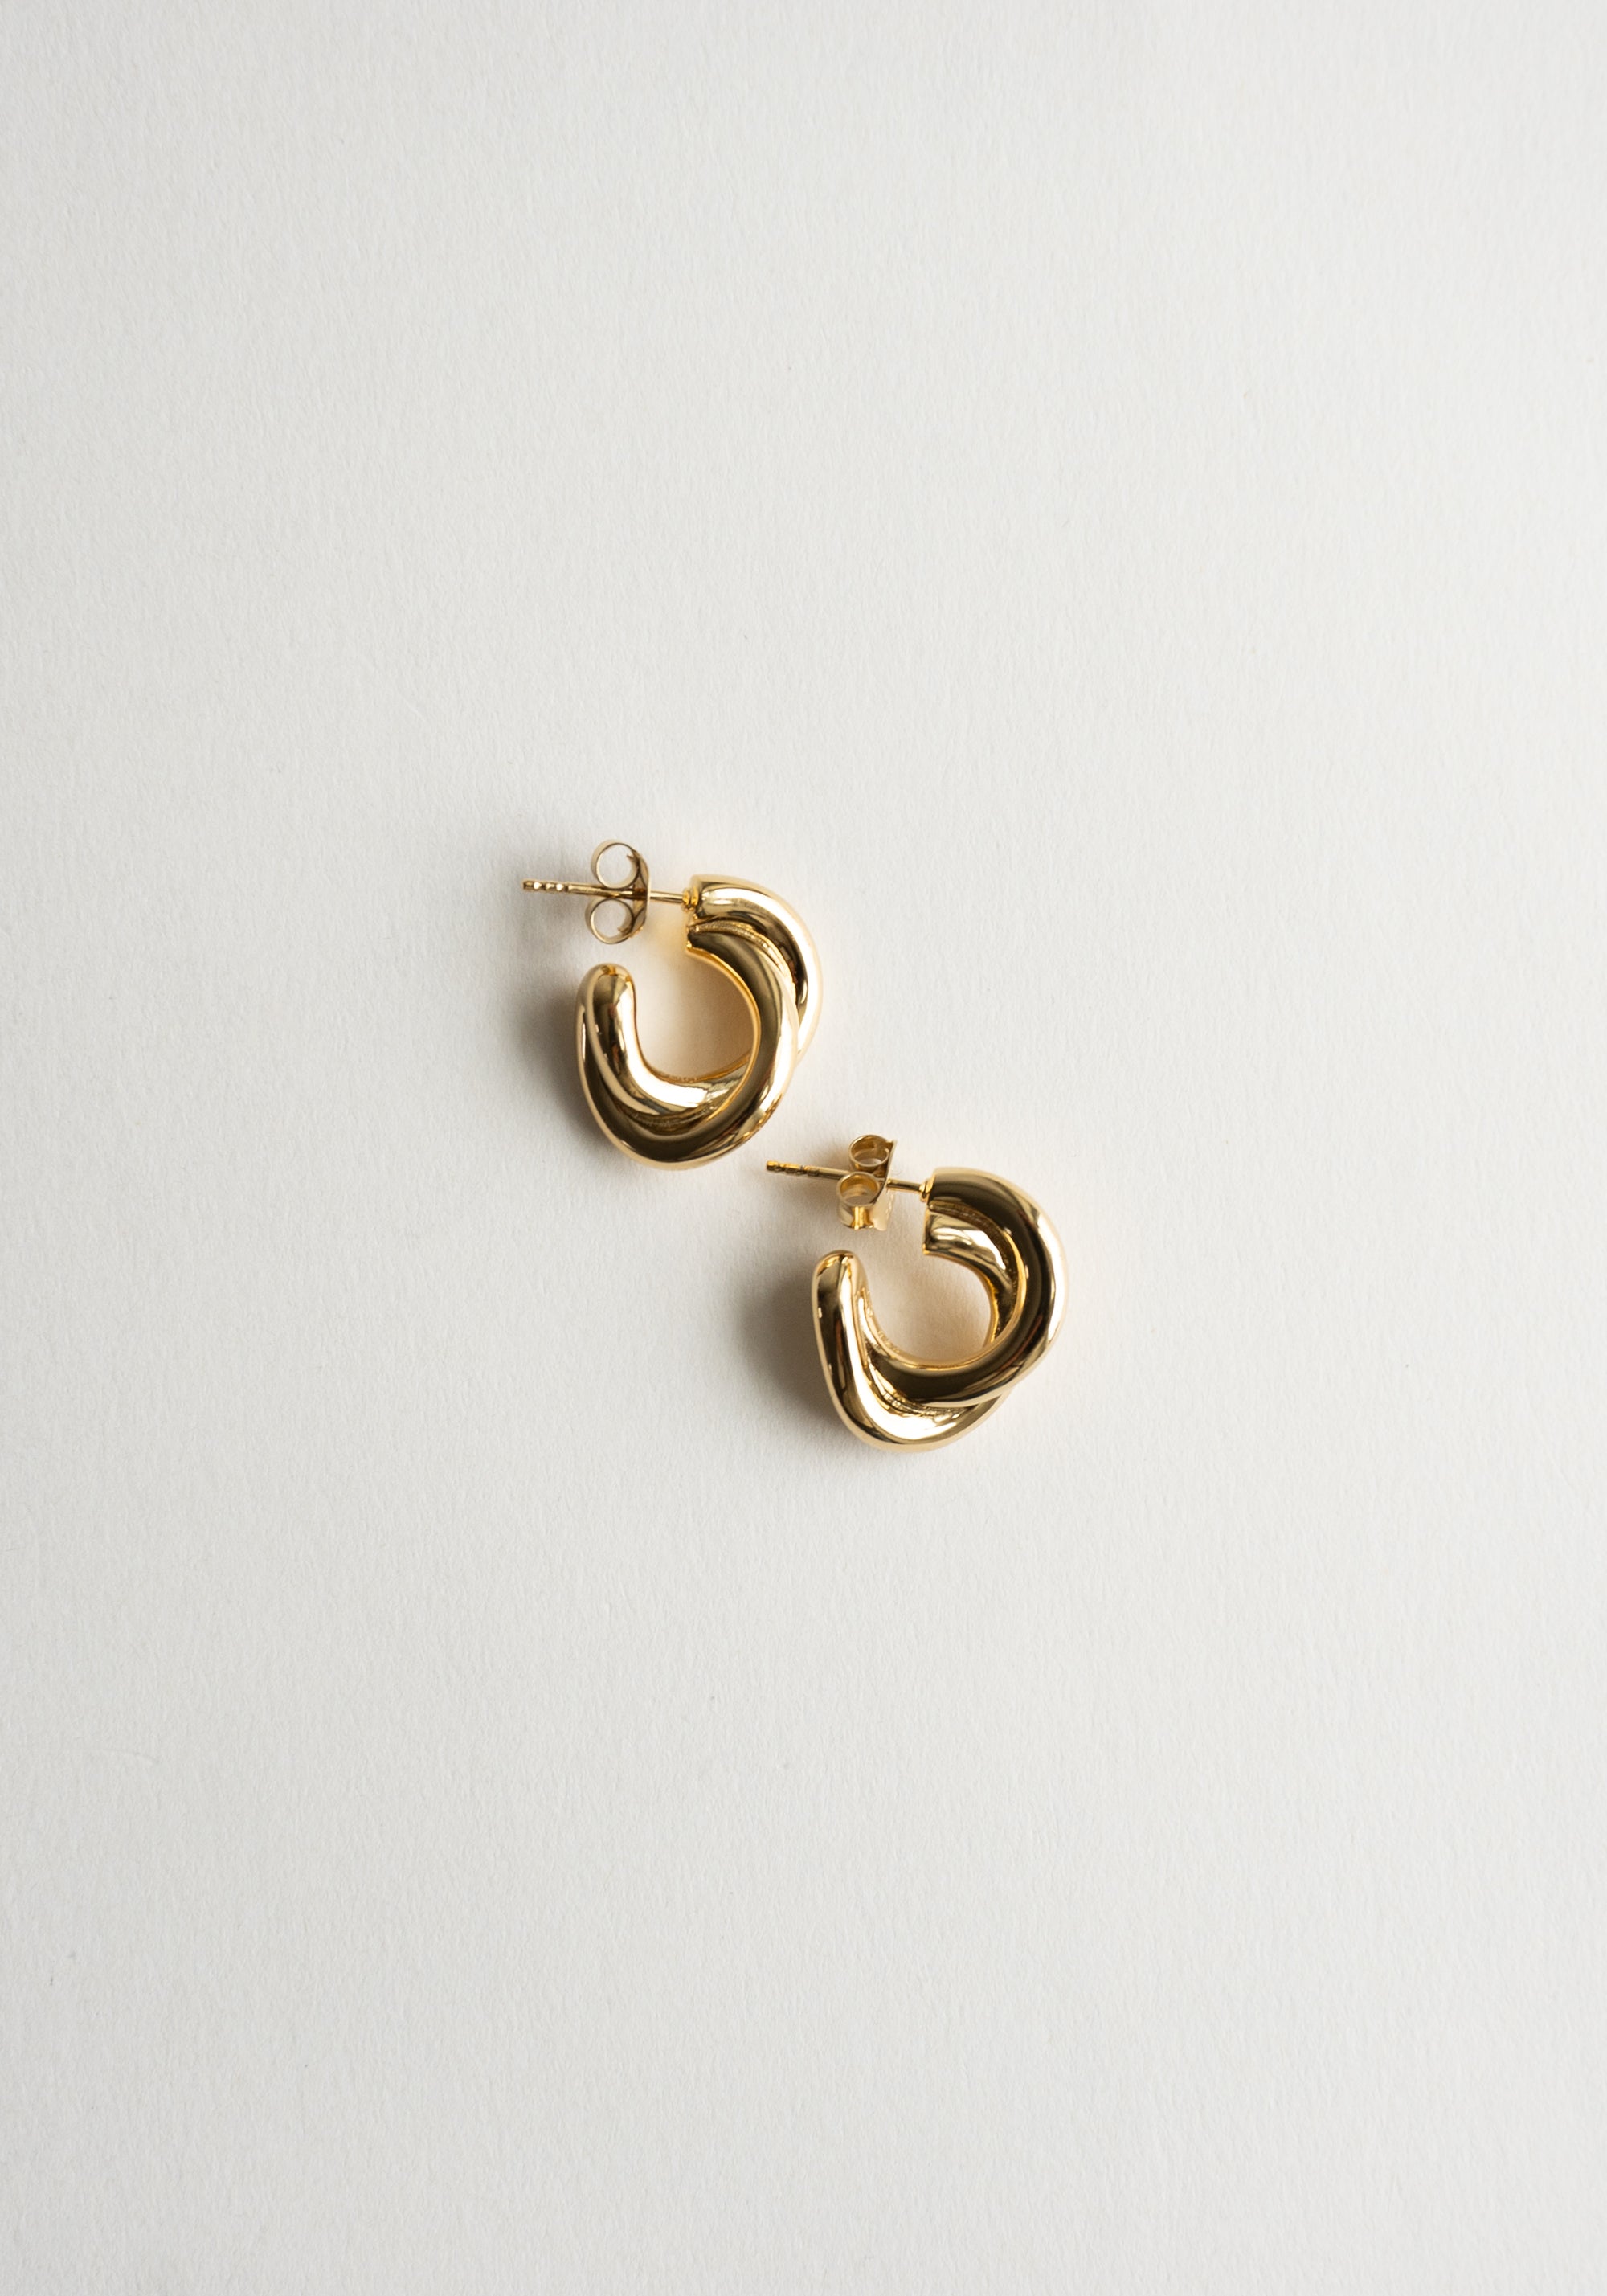 Lie Studio Diana Earrings in Gold